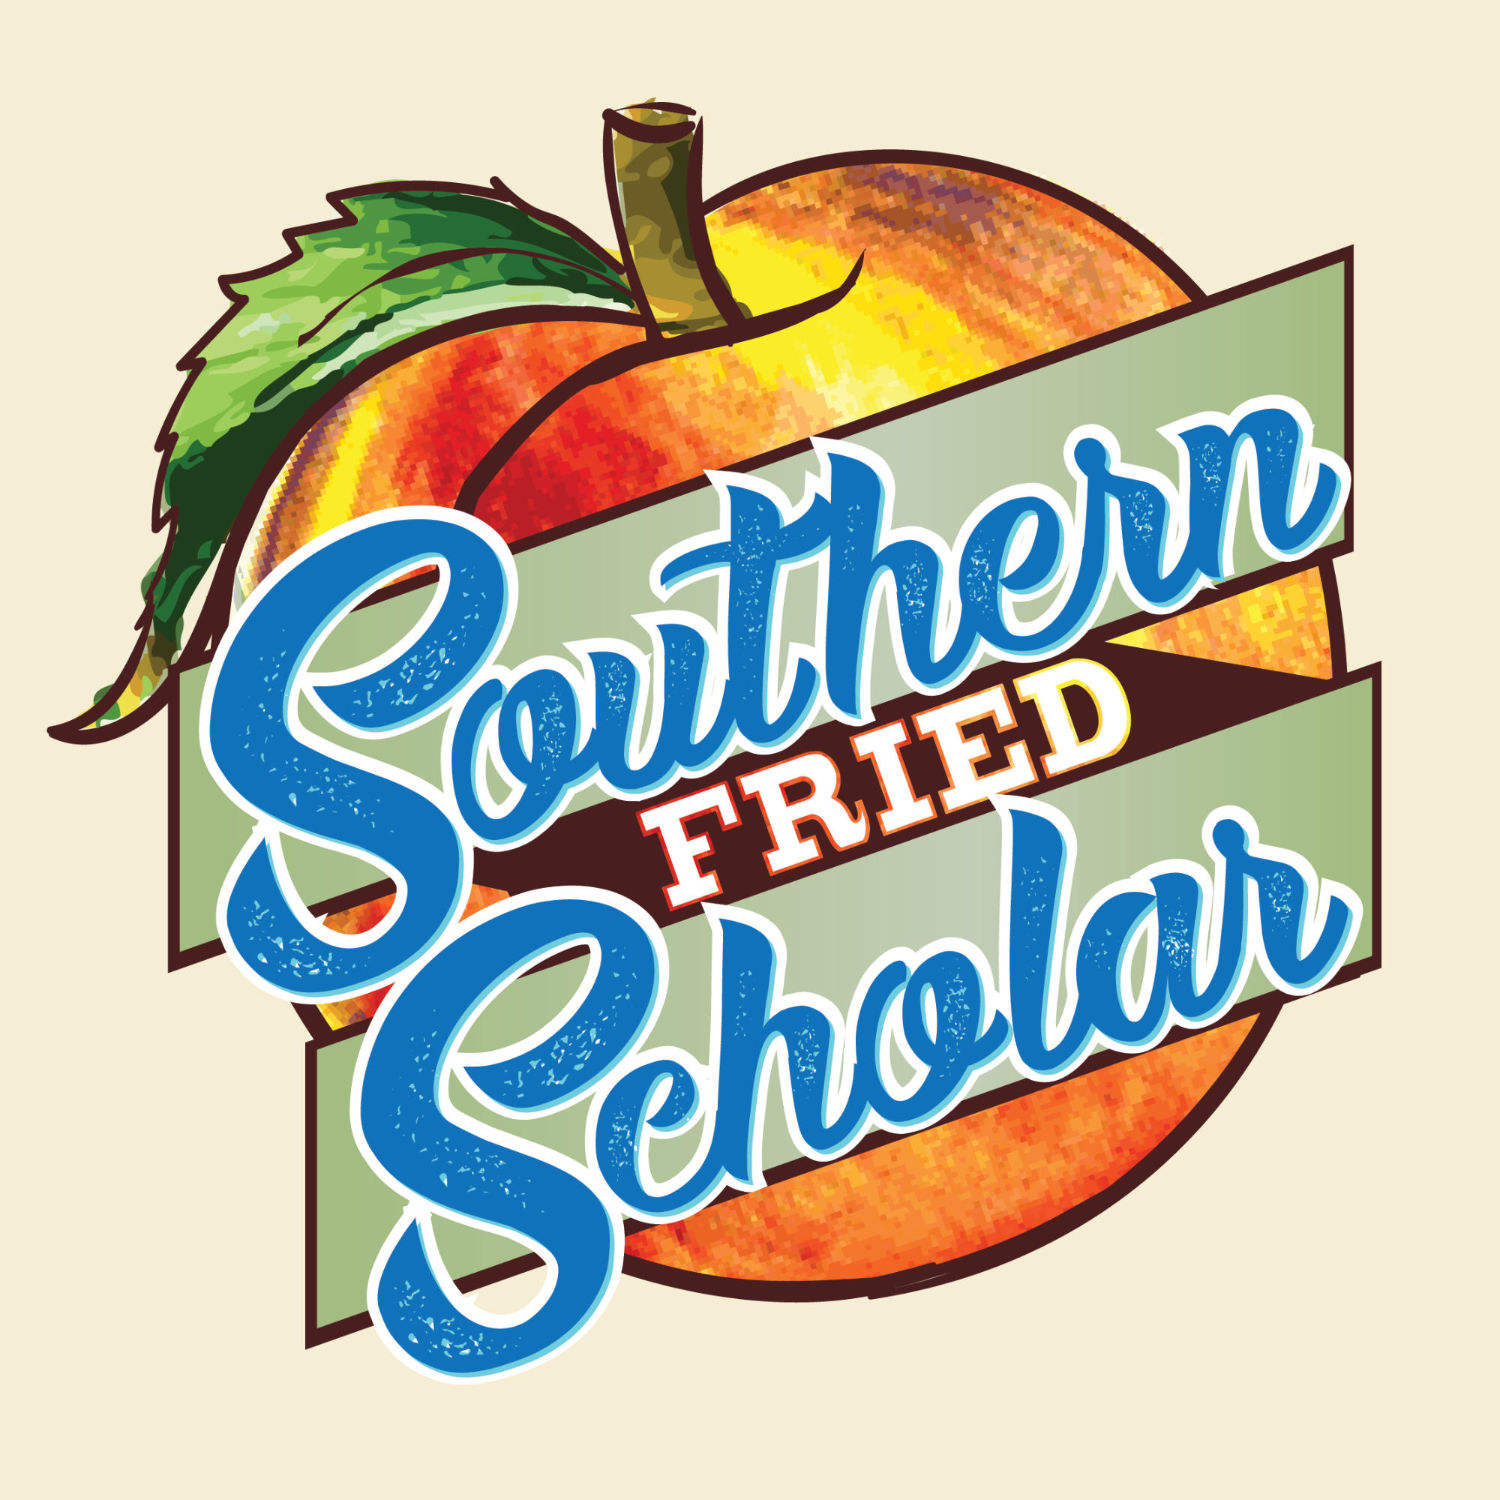 Southern Fried Scholar